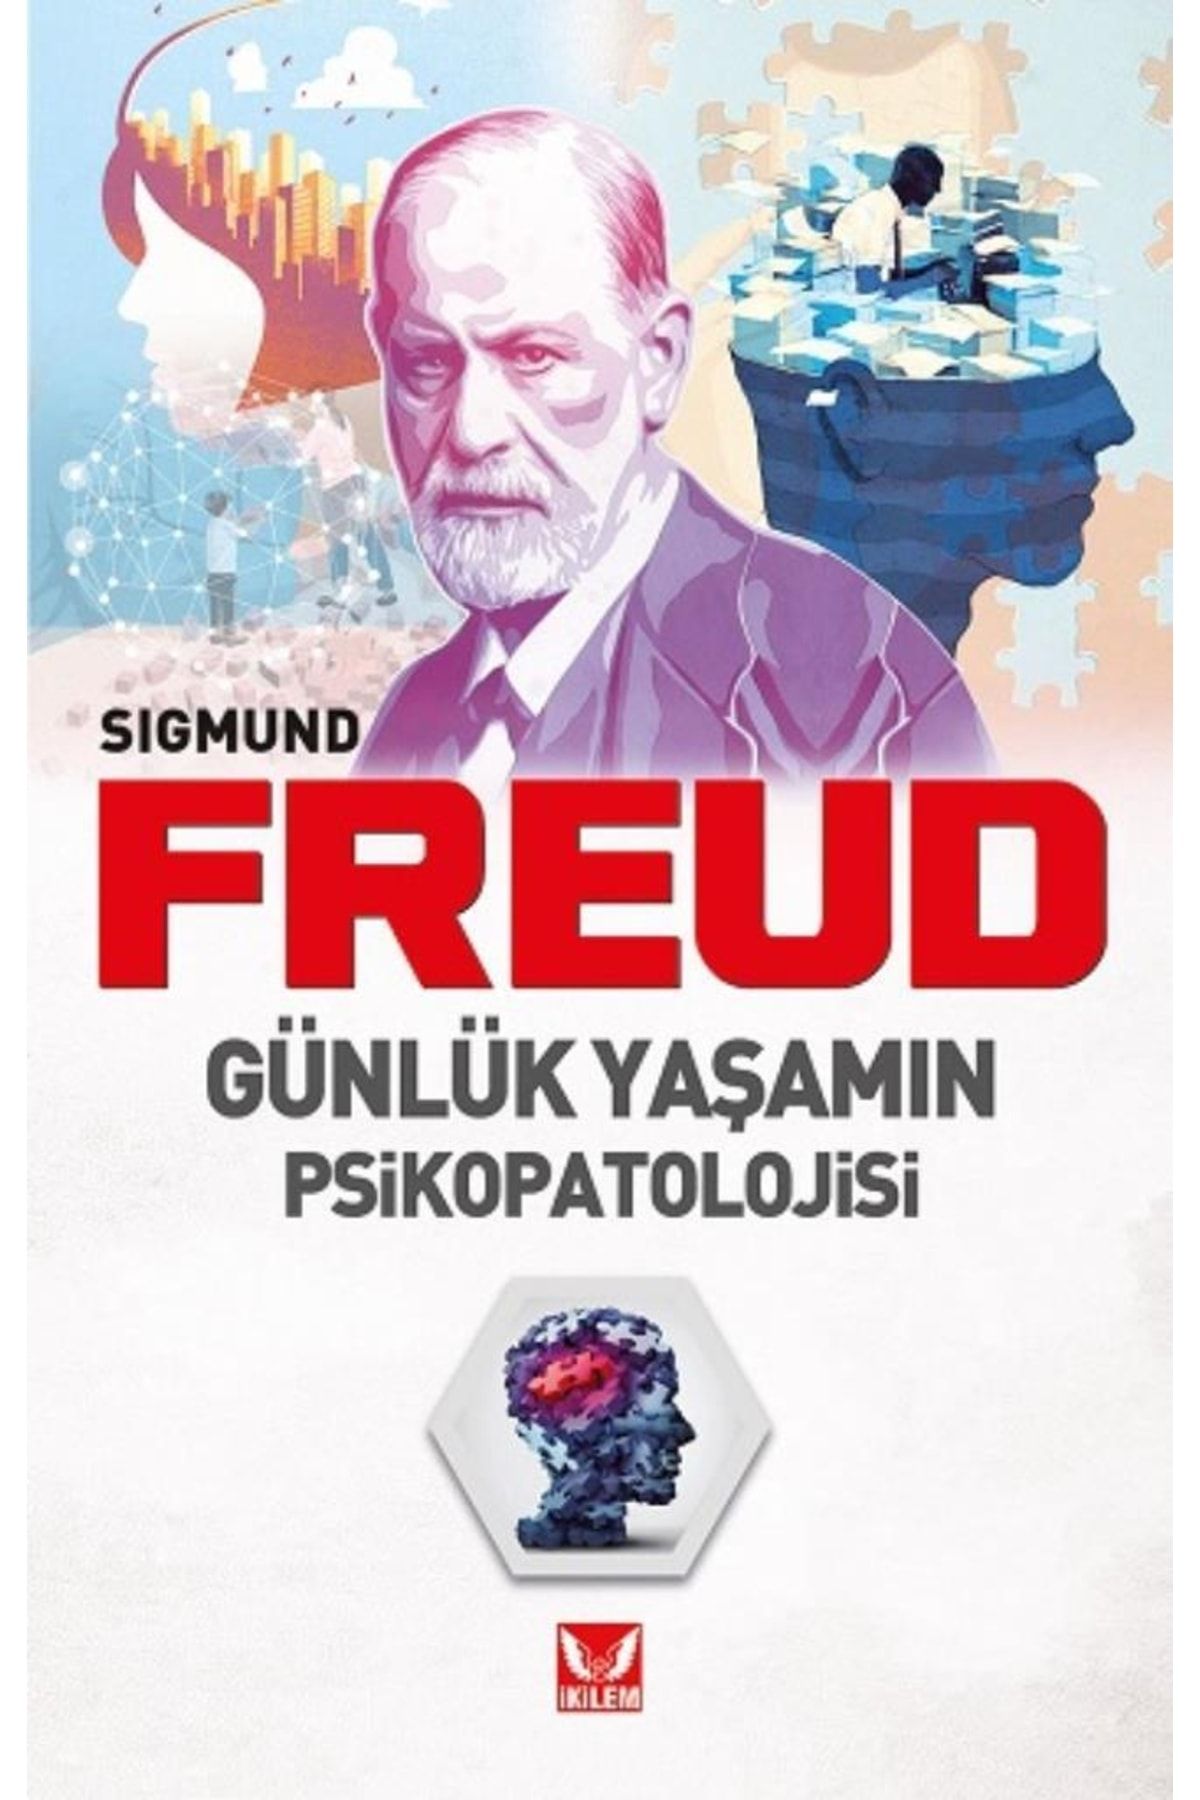 İkilem Yayınevi Günlük Yaşamın Psikopatolojisi Sigmund Freud